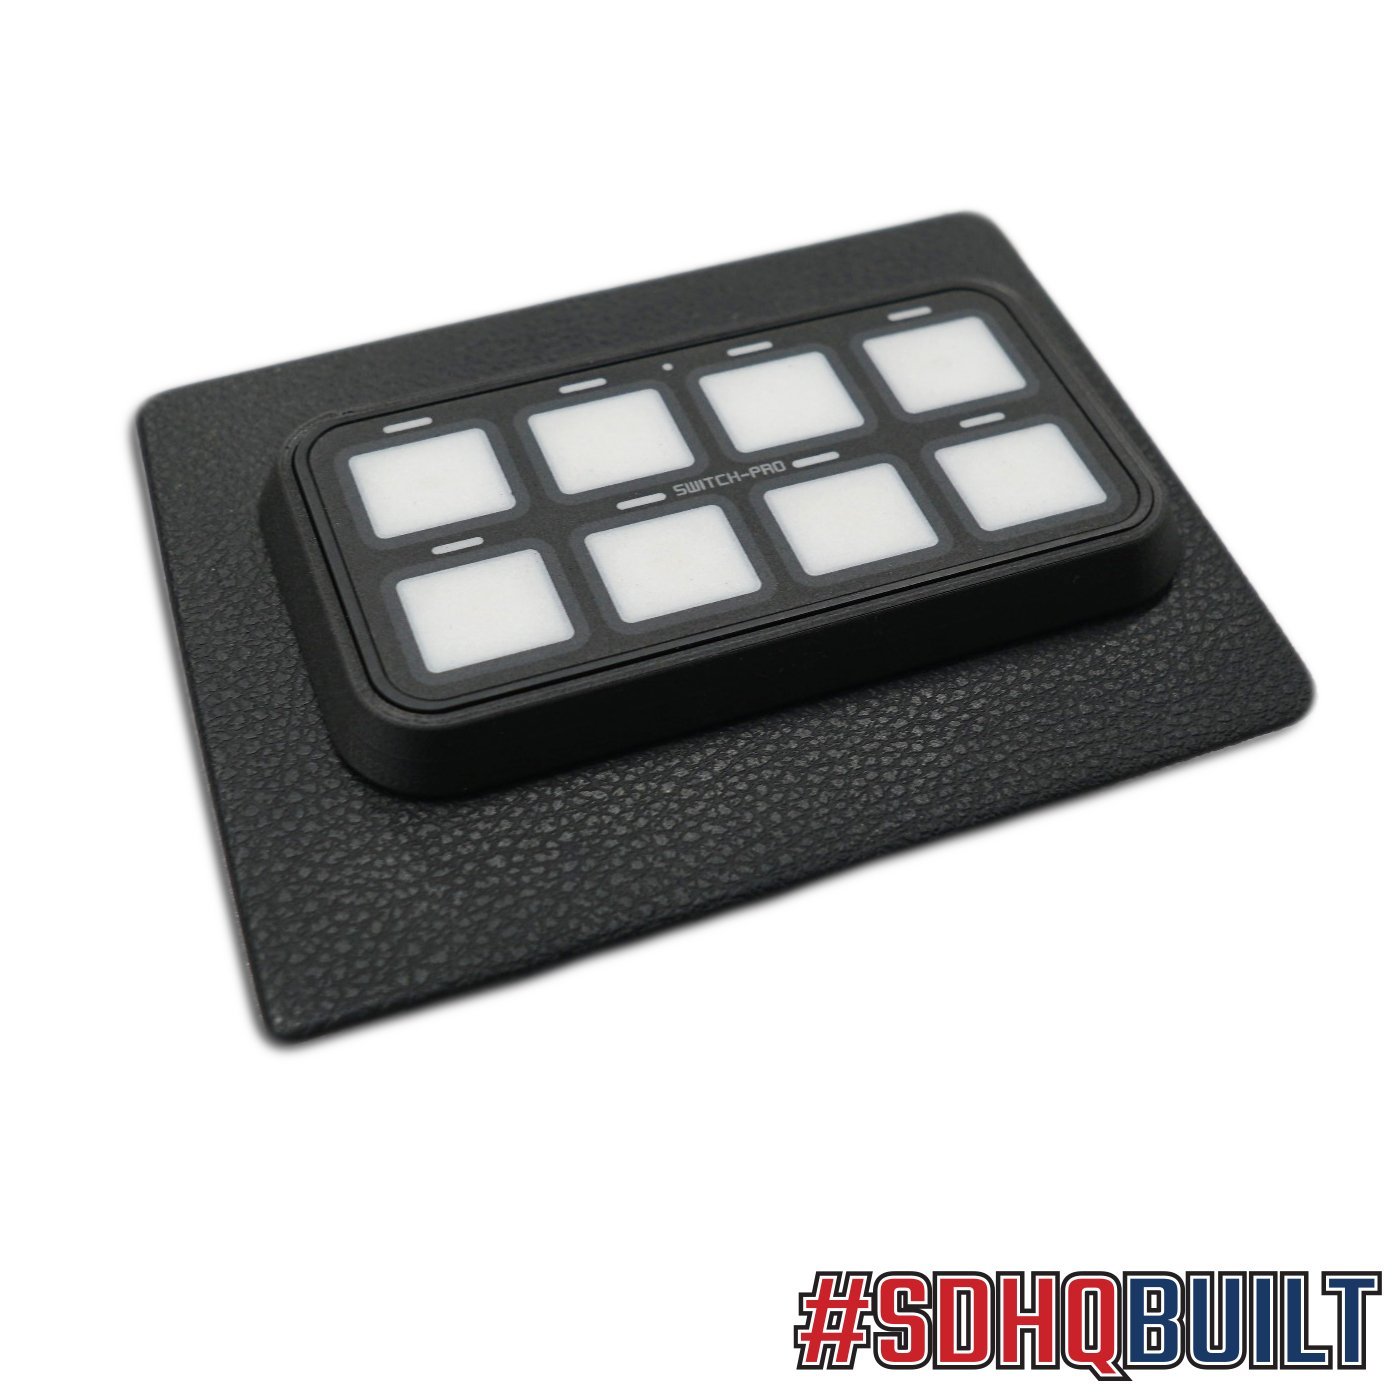 SDHQ Built Universal Switch Pros SP-9100 Keypad Flush Surface Mount Lighting SDHQ Off Road